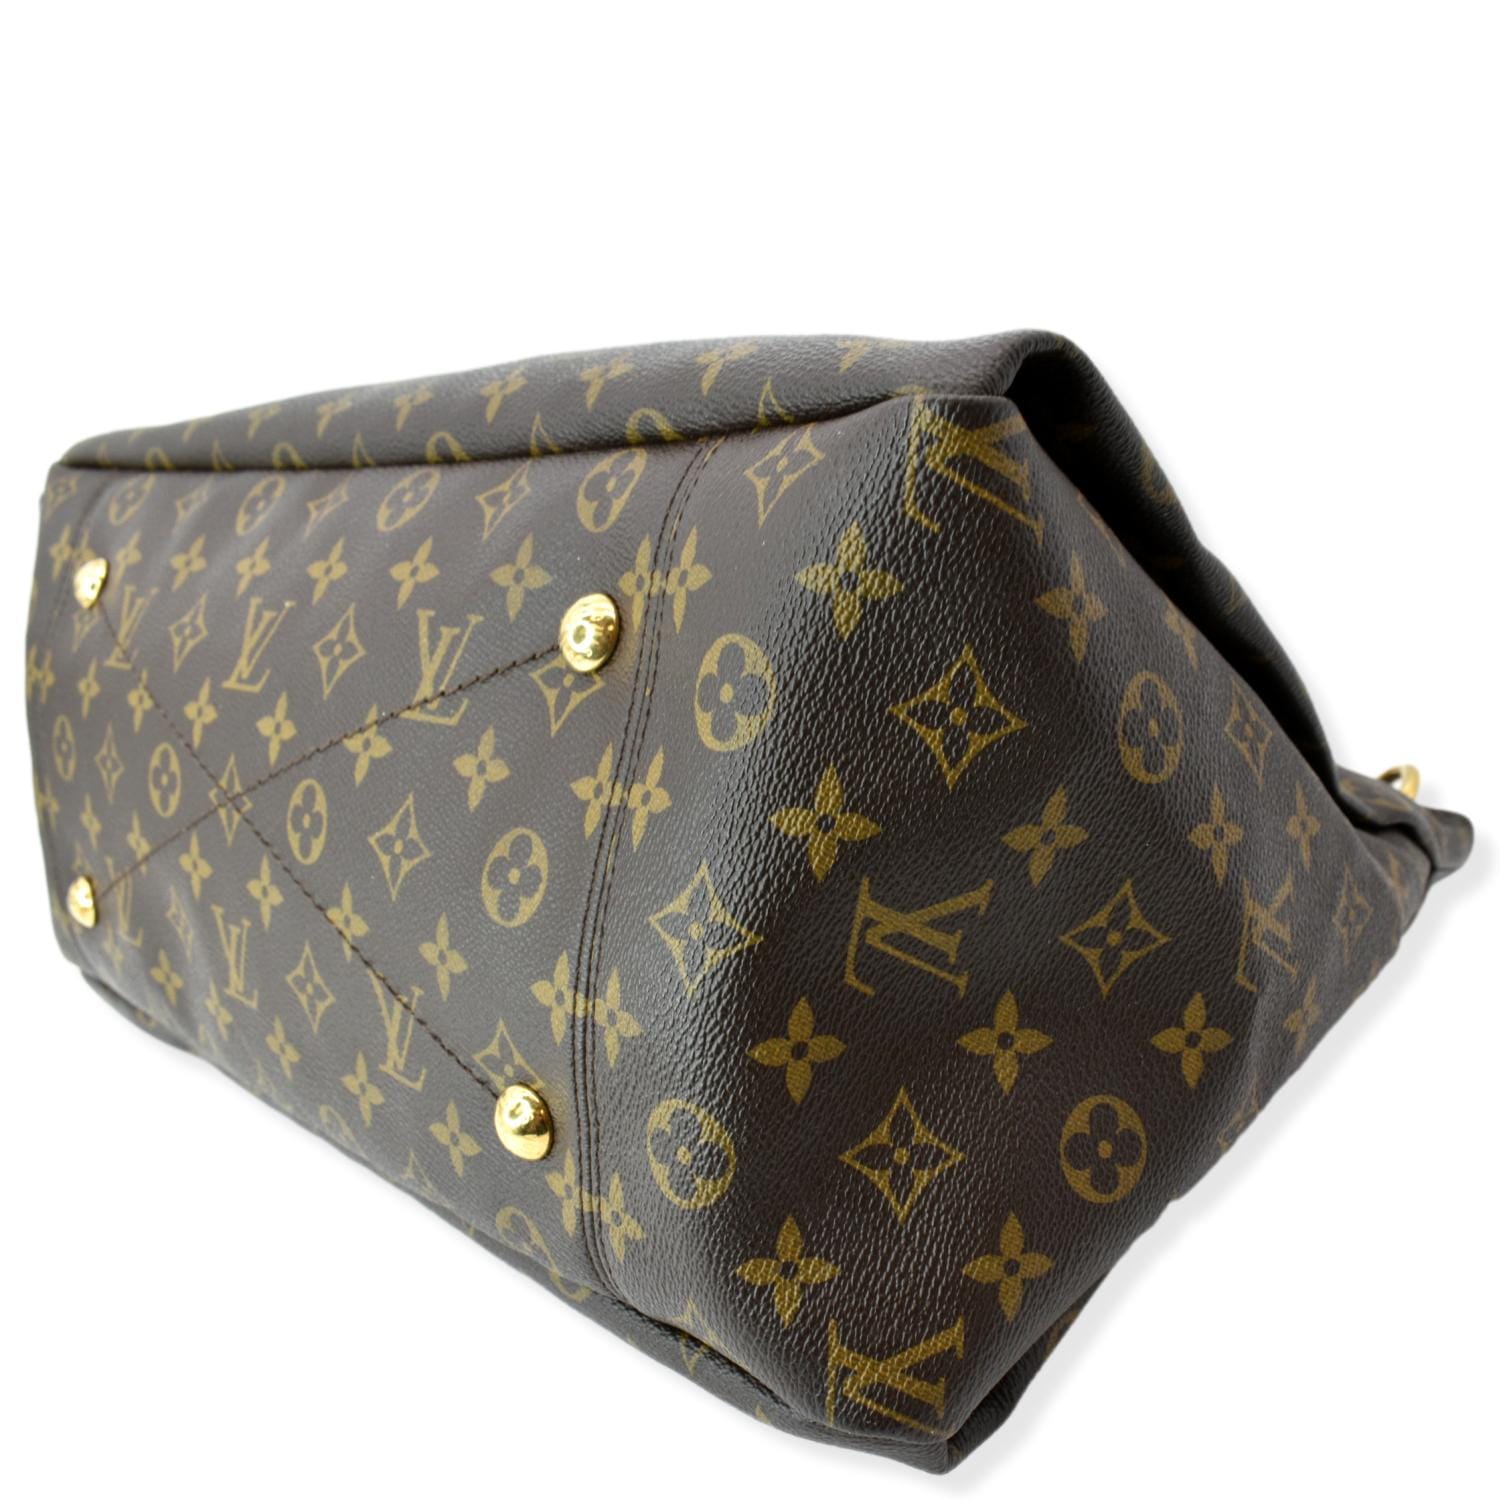 Louis Vuitton Monogram Artsy MM bag - ShopperBoard